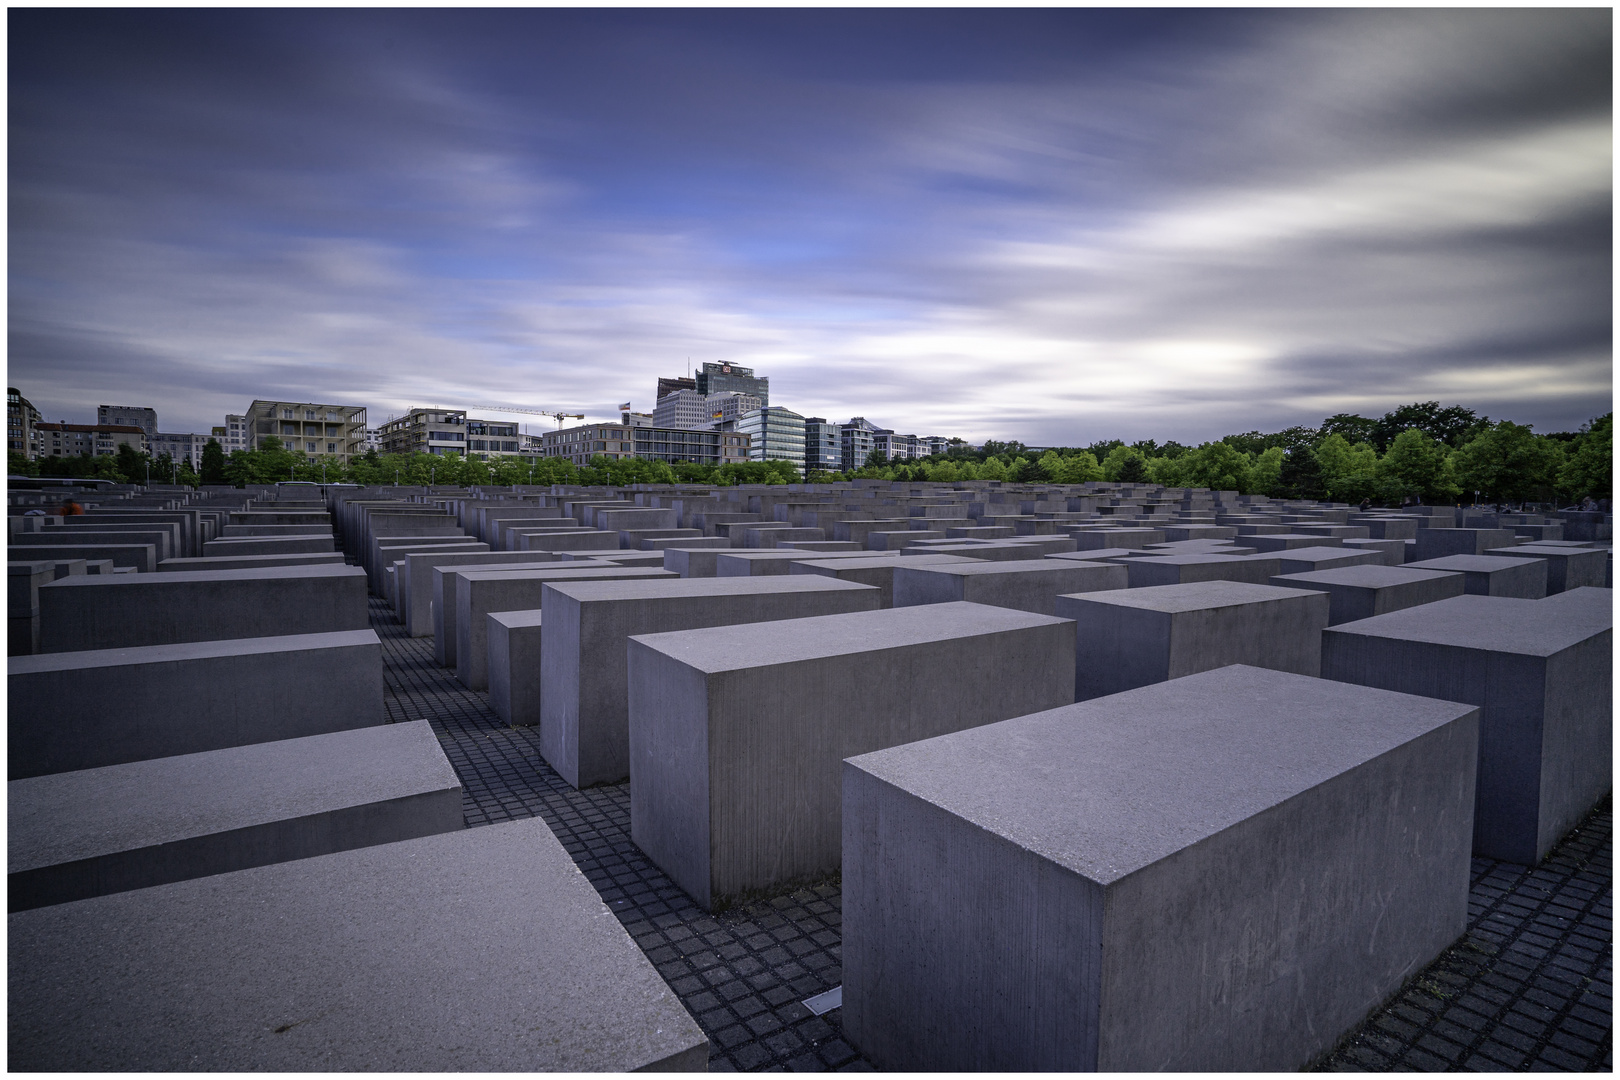 Holocaustdenkmal